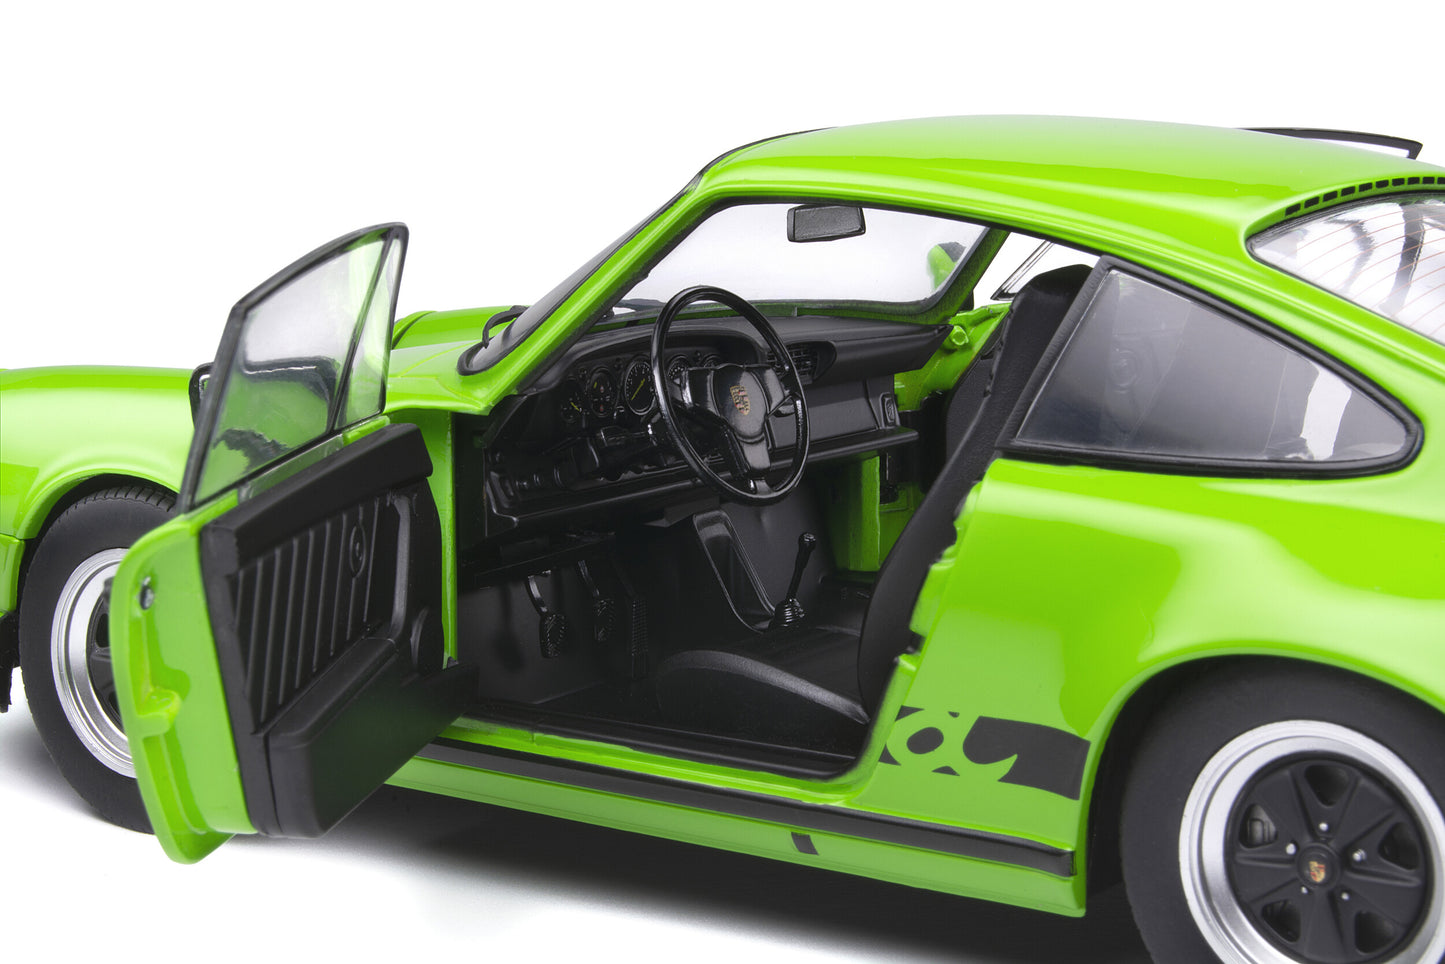 Solido - Porsche 911 (930) Carrera 3.0 (Gelbgrün Green) 1:18 Scale Model Car